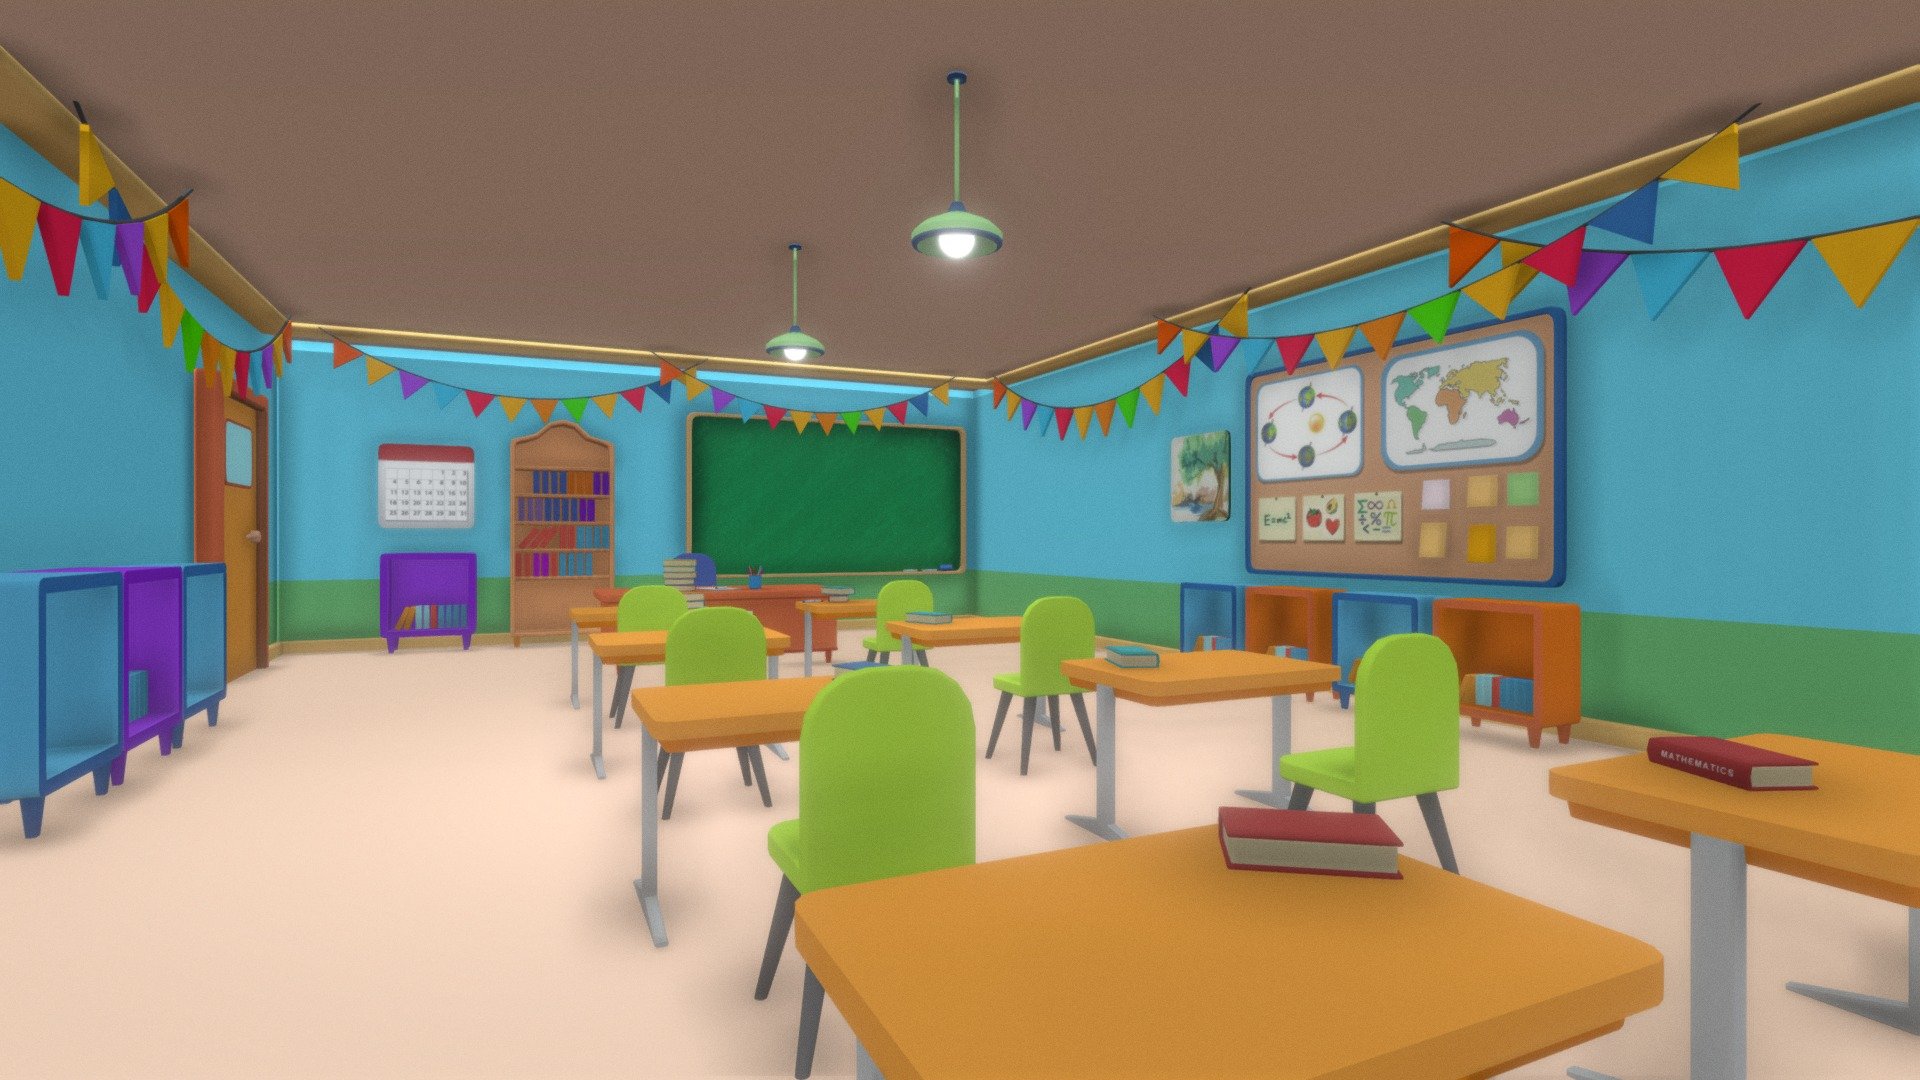 Classroom - 3D model by CengizDK 3d model